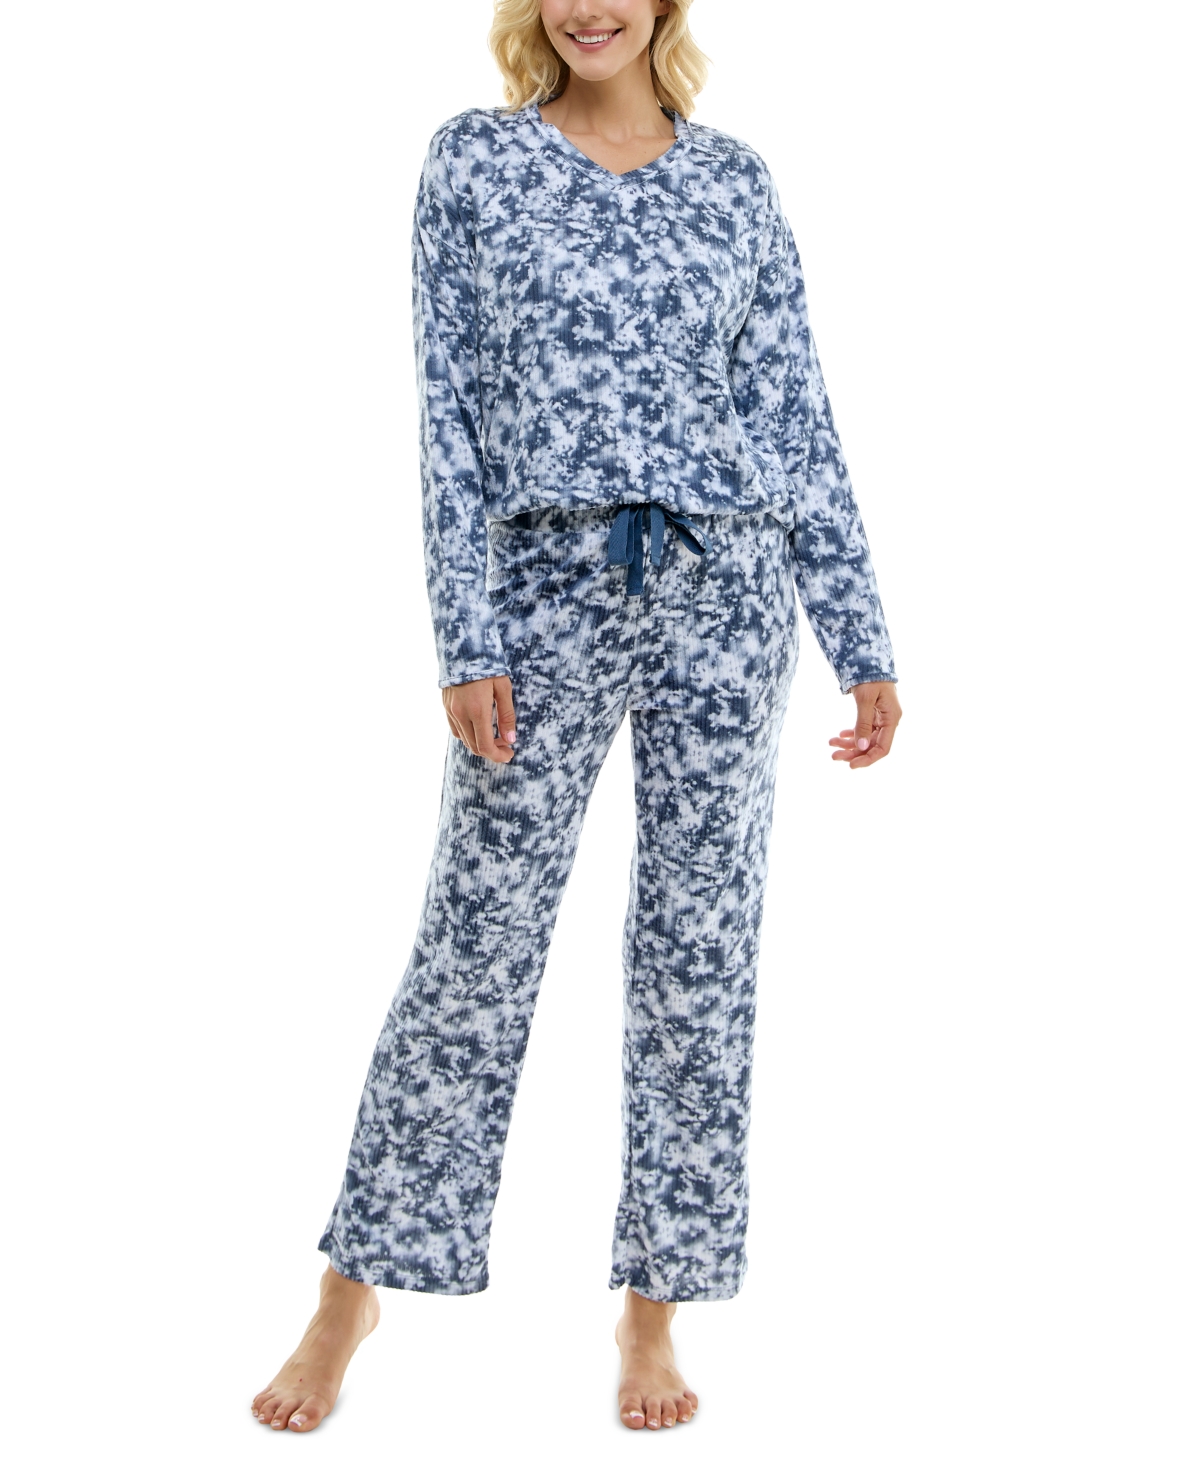 Roudelain Women's 2-pc. Whisperluxe Printed Pajamas Set In Ariel Tie Dye